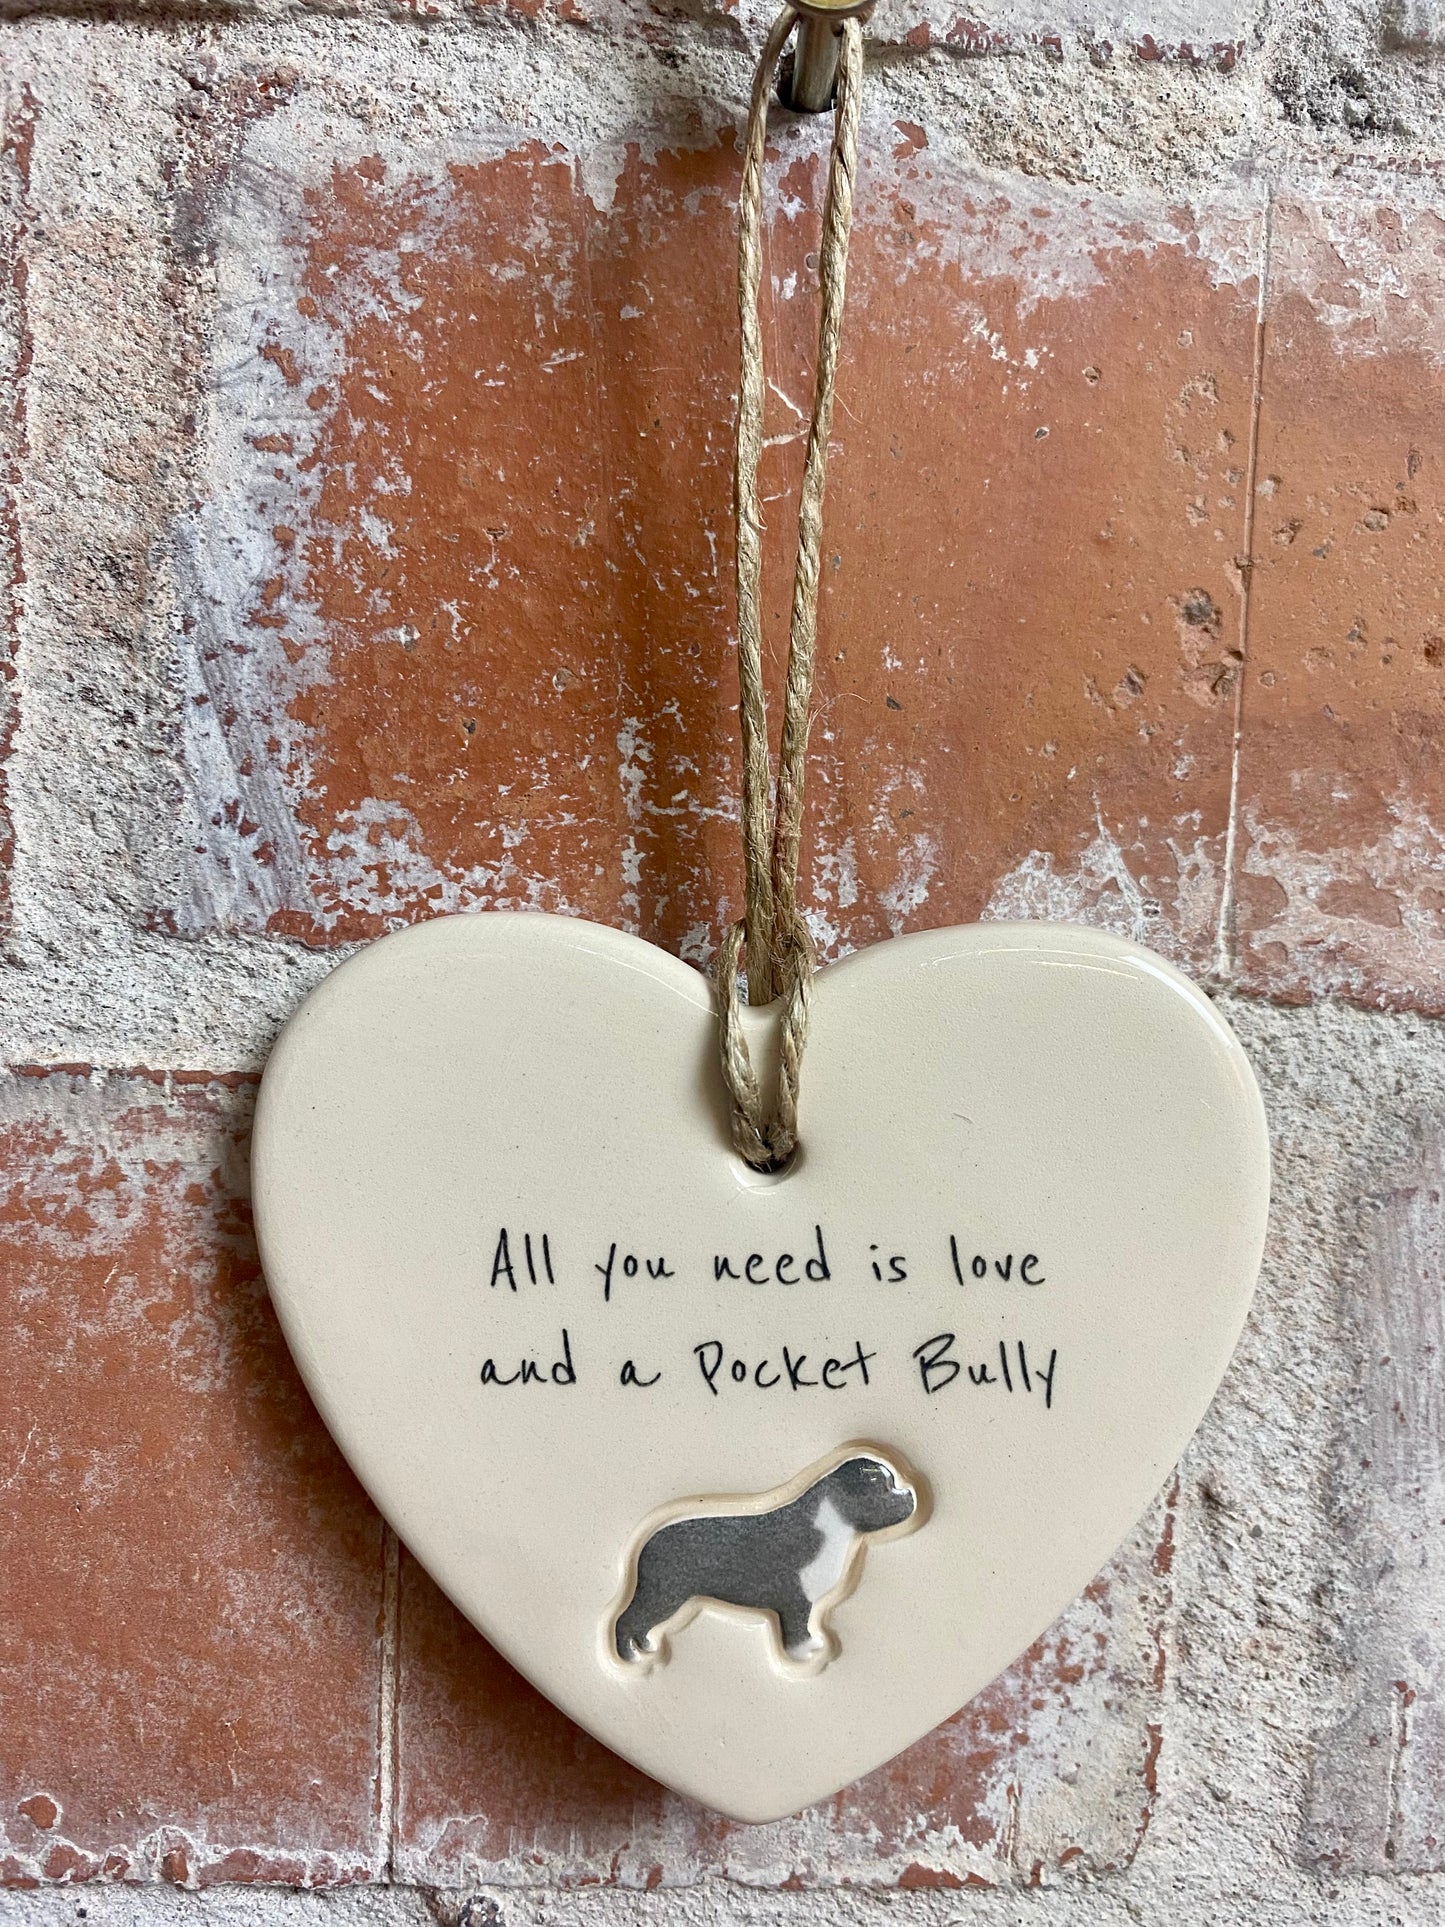 Pocket Bully ceramic heart